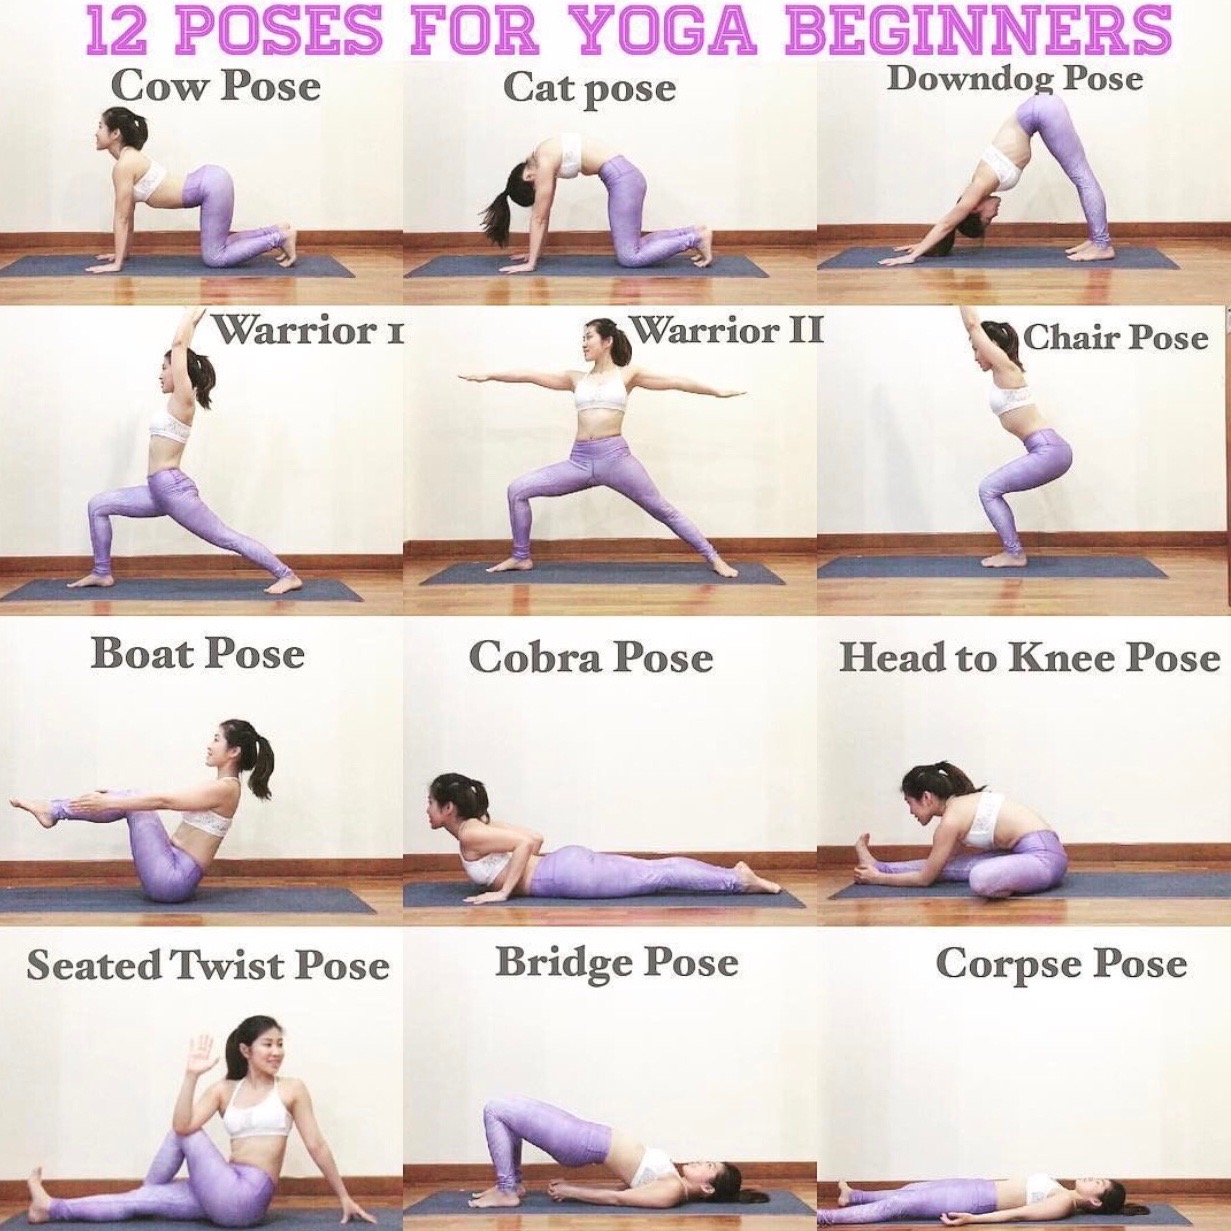 12 Easy Yoga Poses For Yoga Beginners Easy Yoga Poses, Yoga, 55% OFF